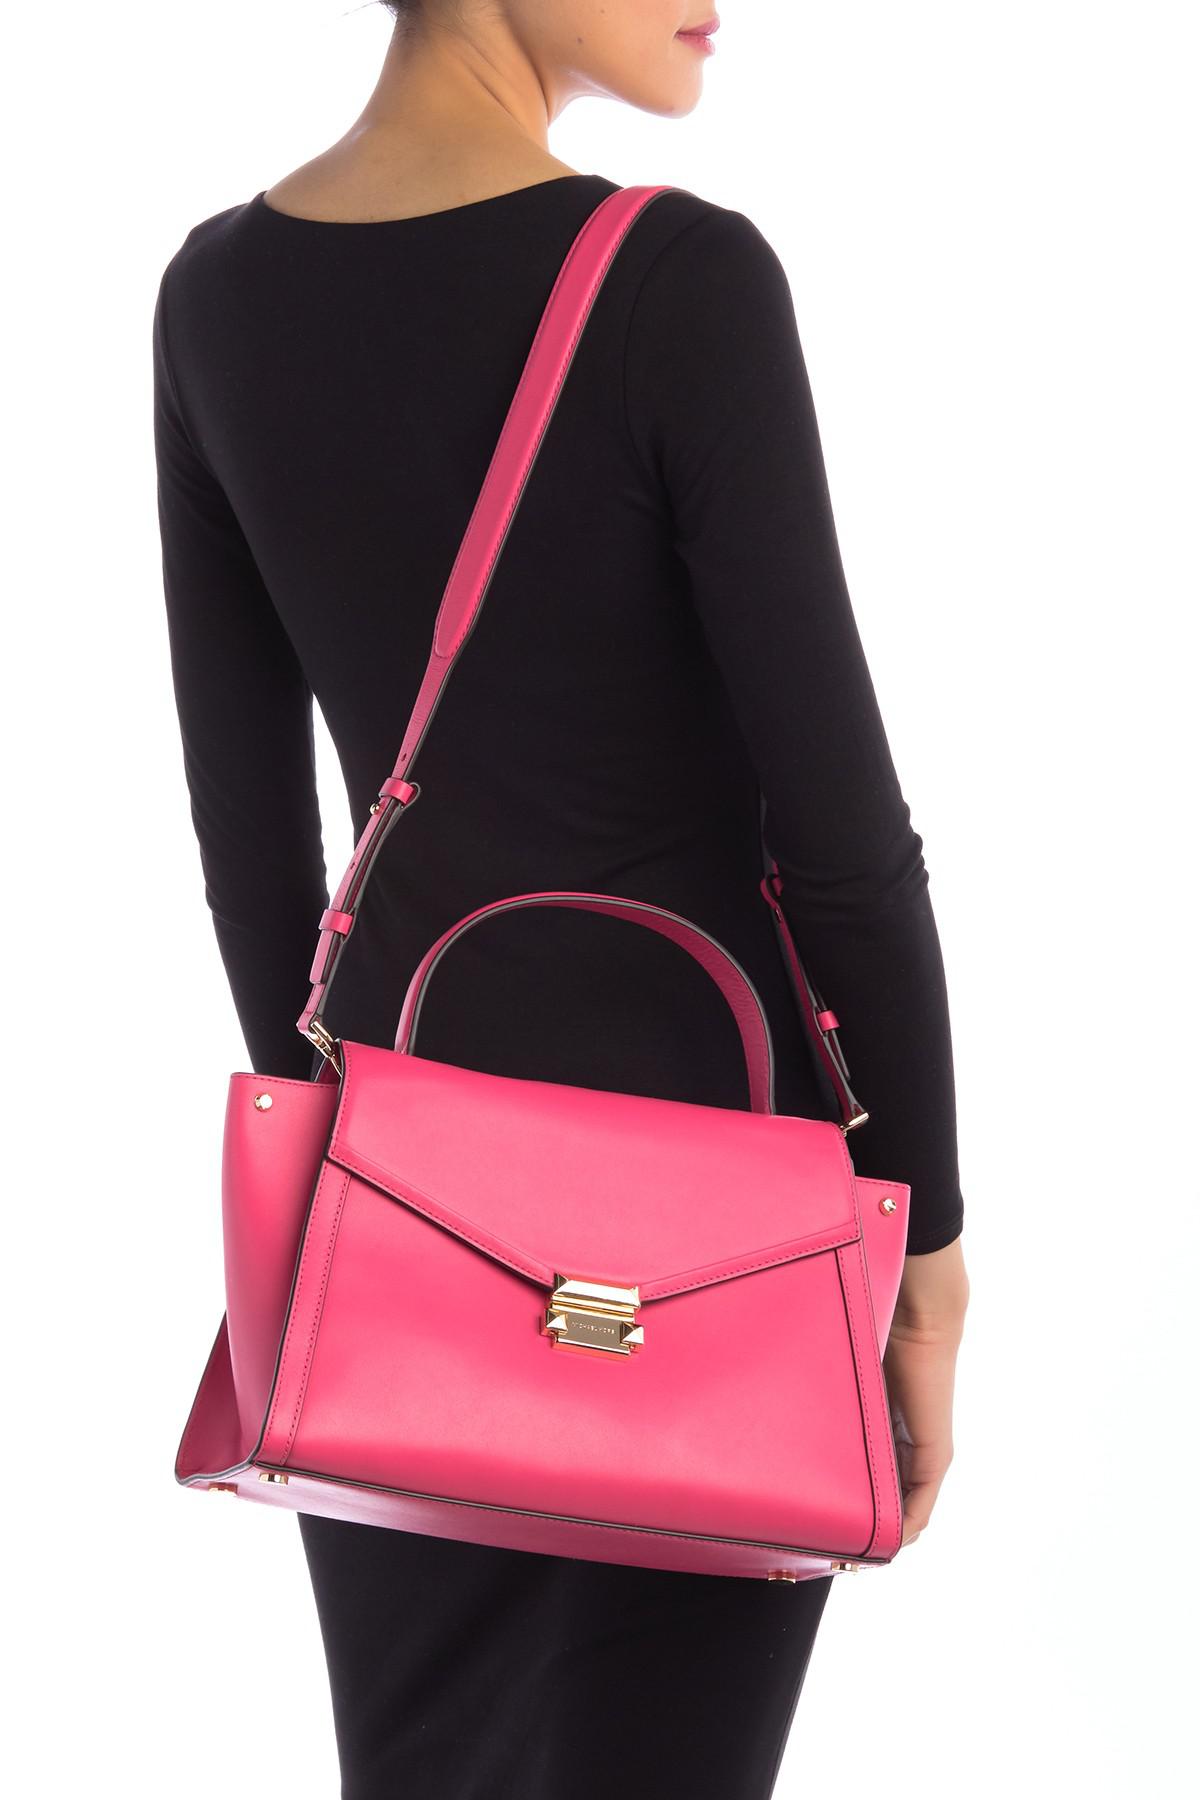 MICHAEL Michael Kors Whitney Large Polished Leather Shoulder Bag in Rose Pink (Pink) - Lyst